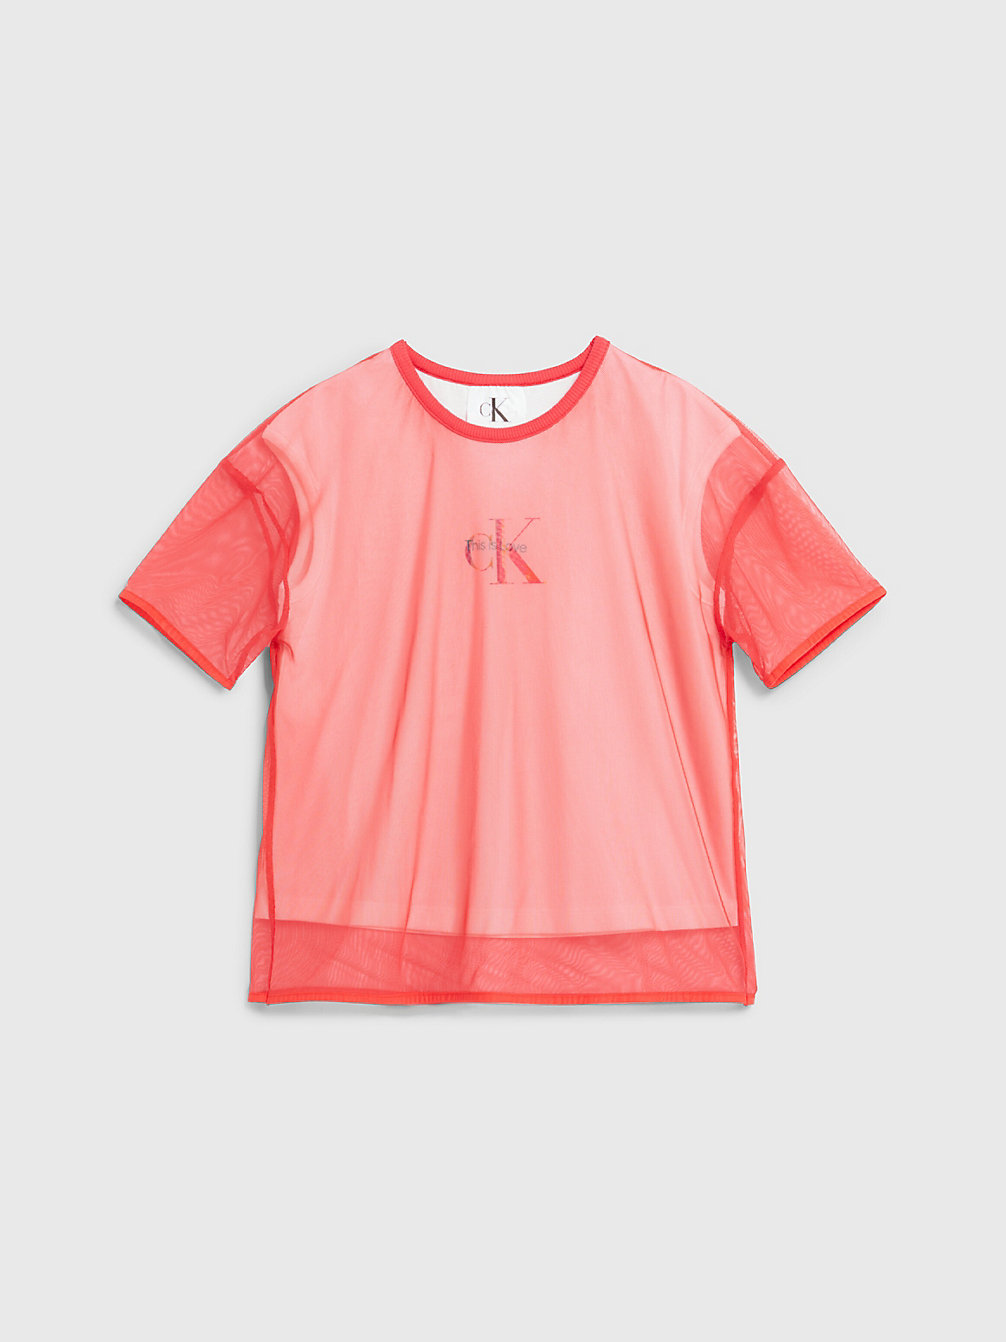 BITTERSWEET Layered Mesh Pride Logo T-Shirt - Pride undefined girls Calvin Klein